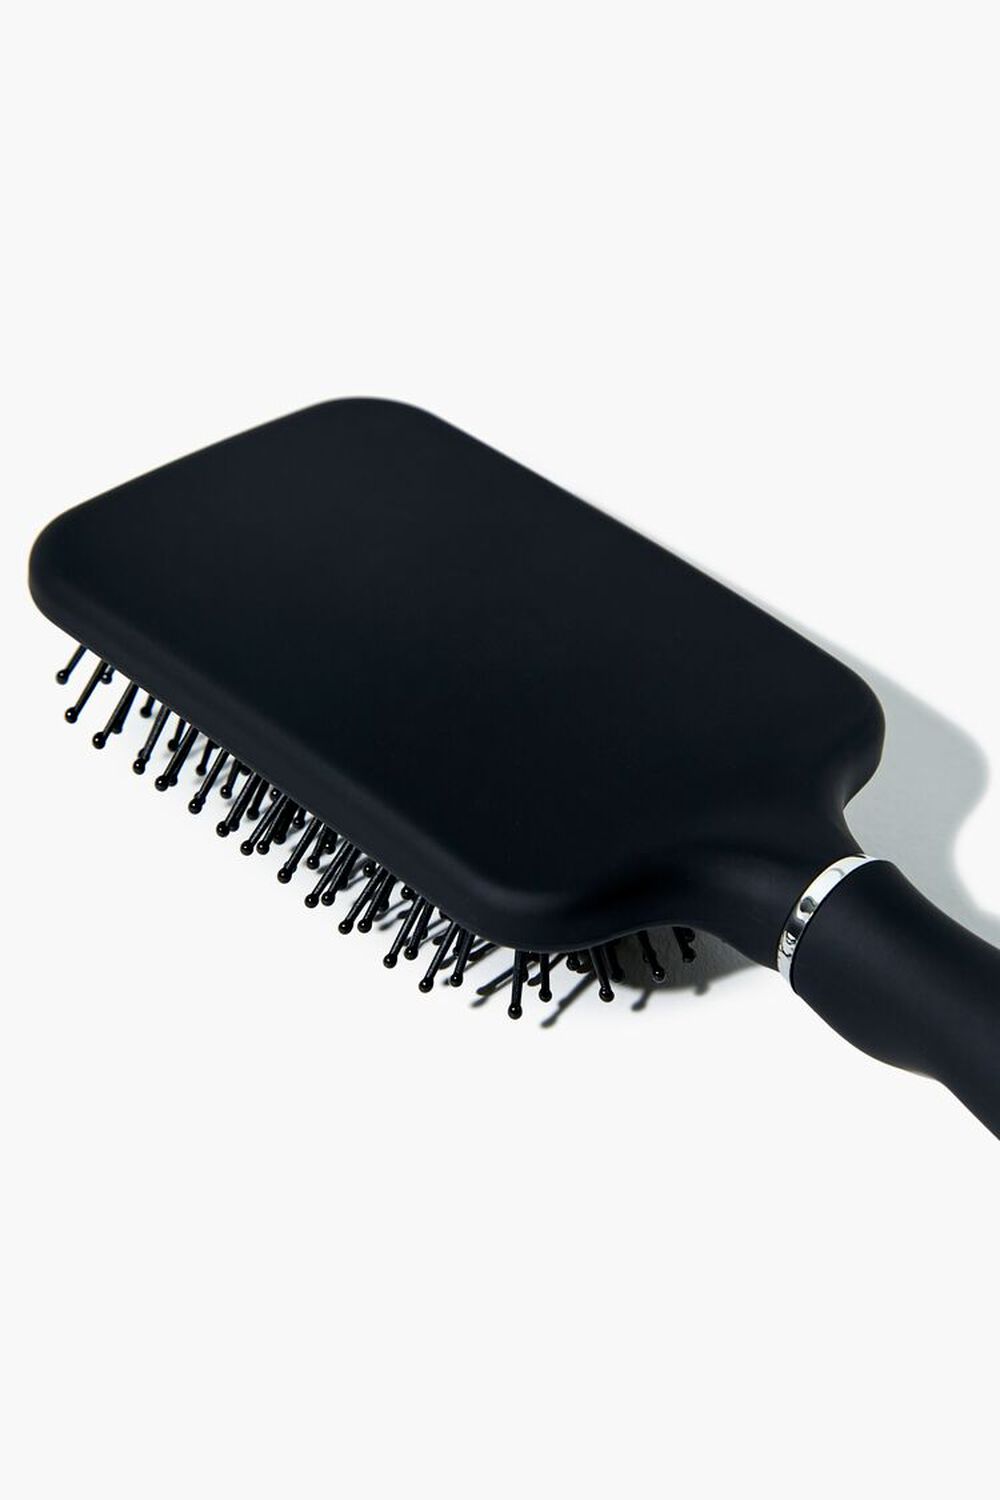 Ball-Tip Hair Brush, image 2